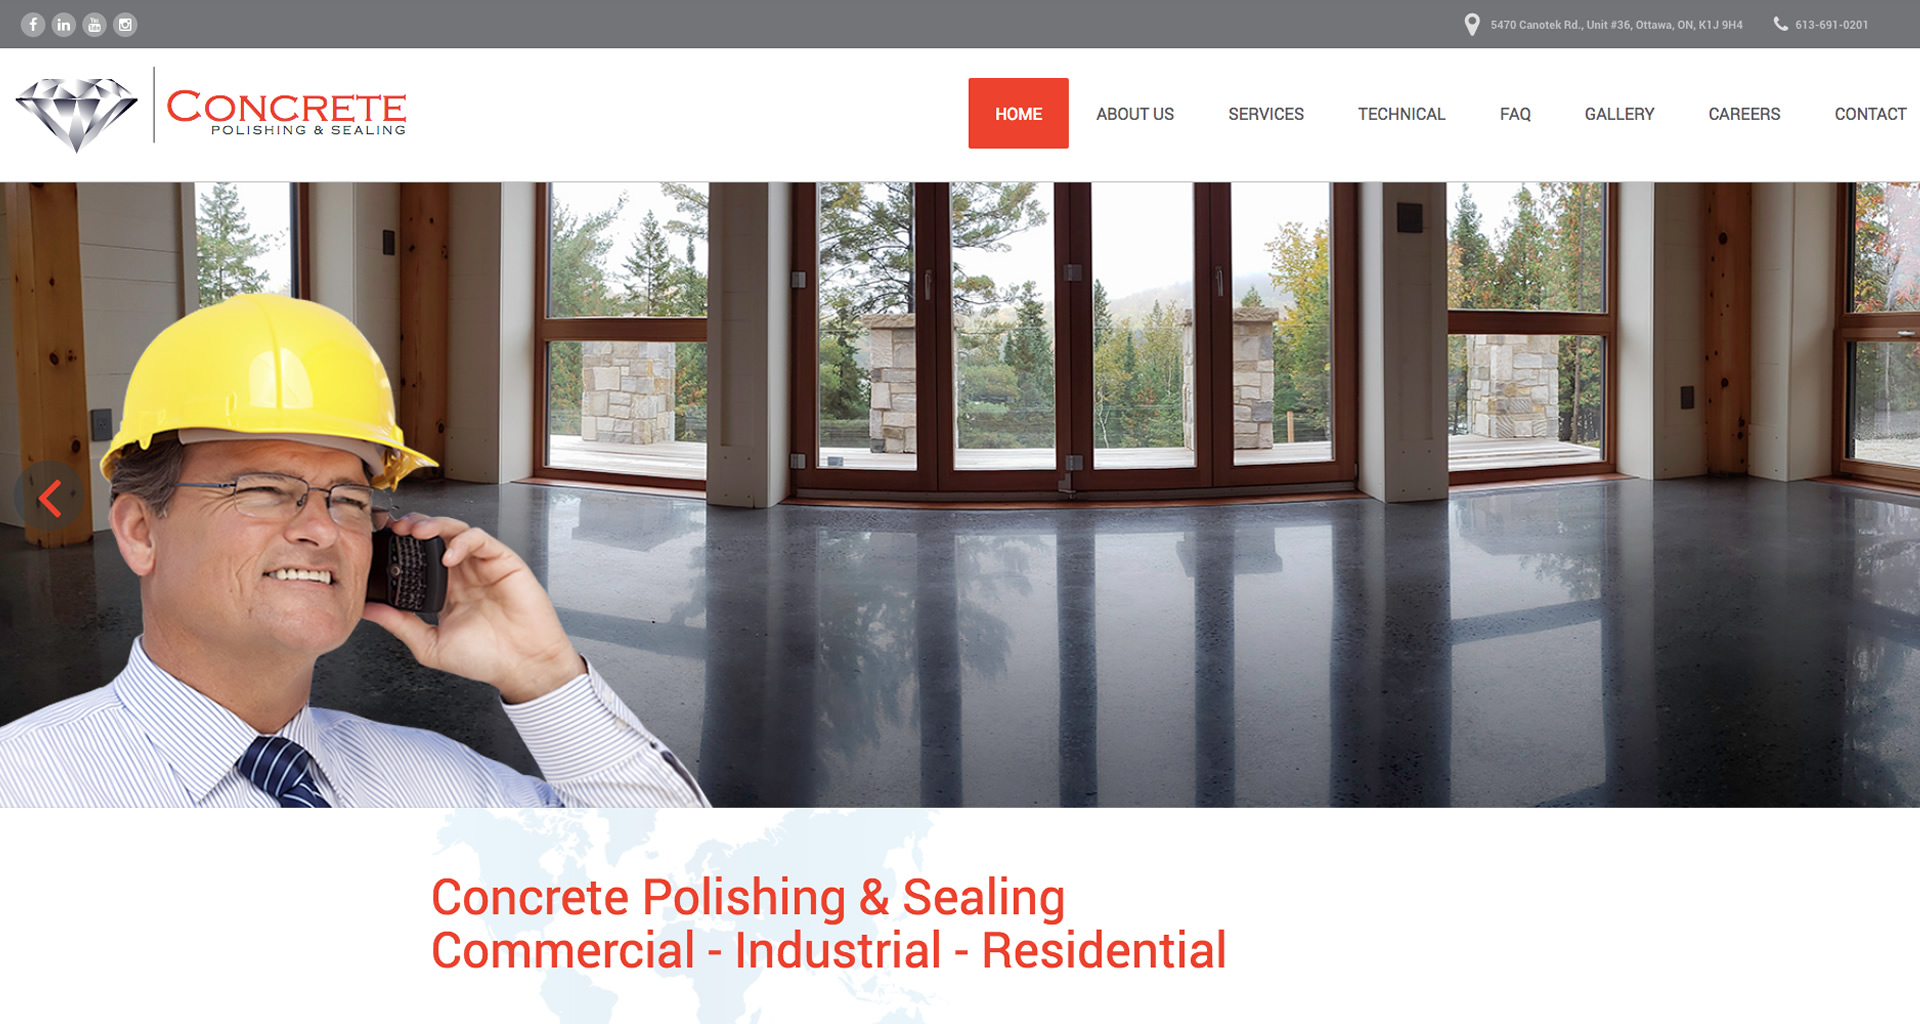 Concrete Polishing & Sealing Ltd webdesign by 45 Degrees Latitude